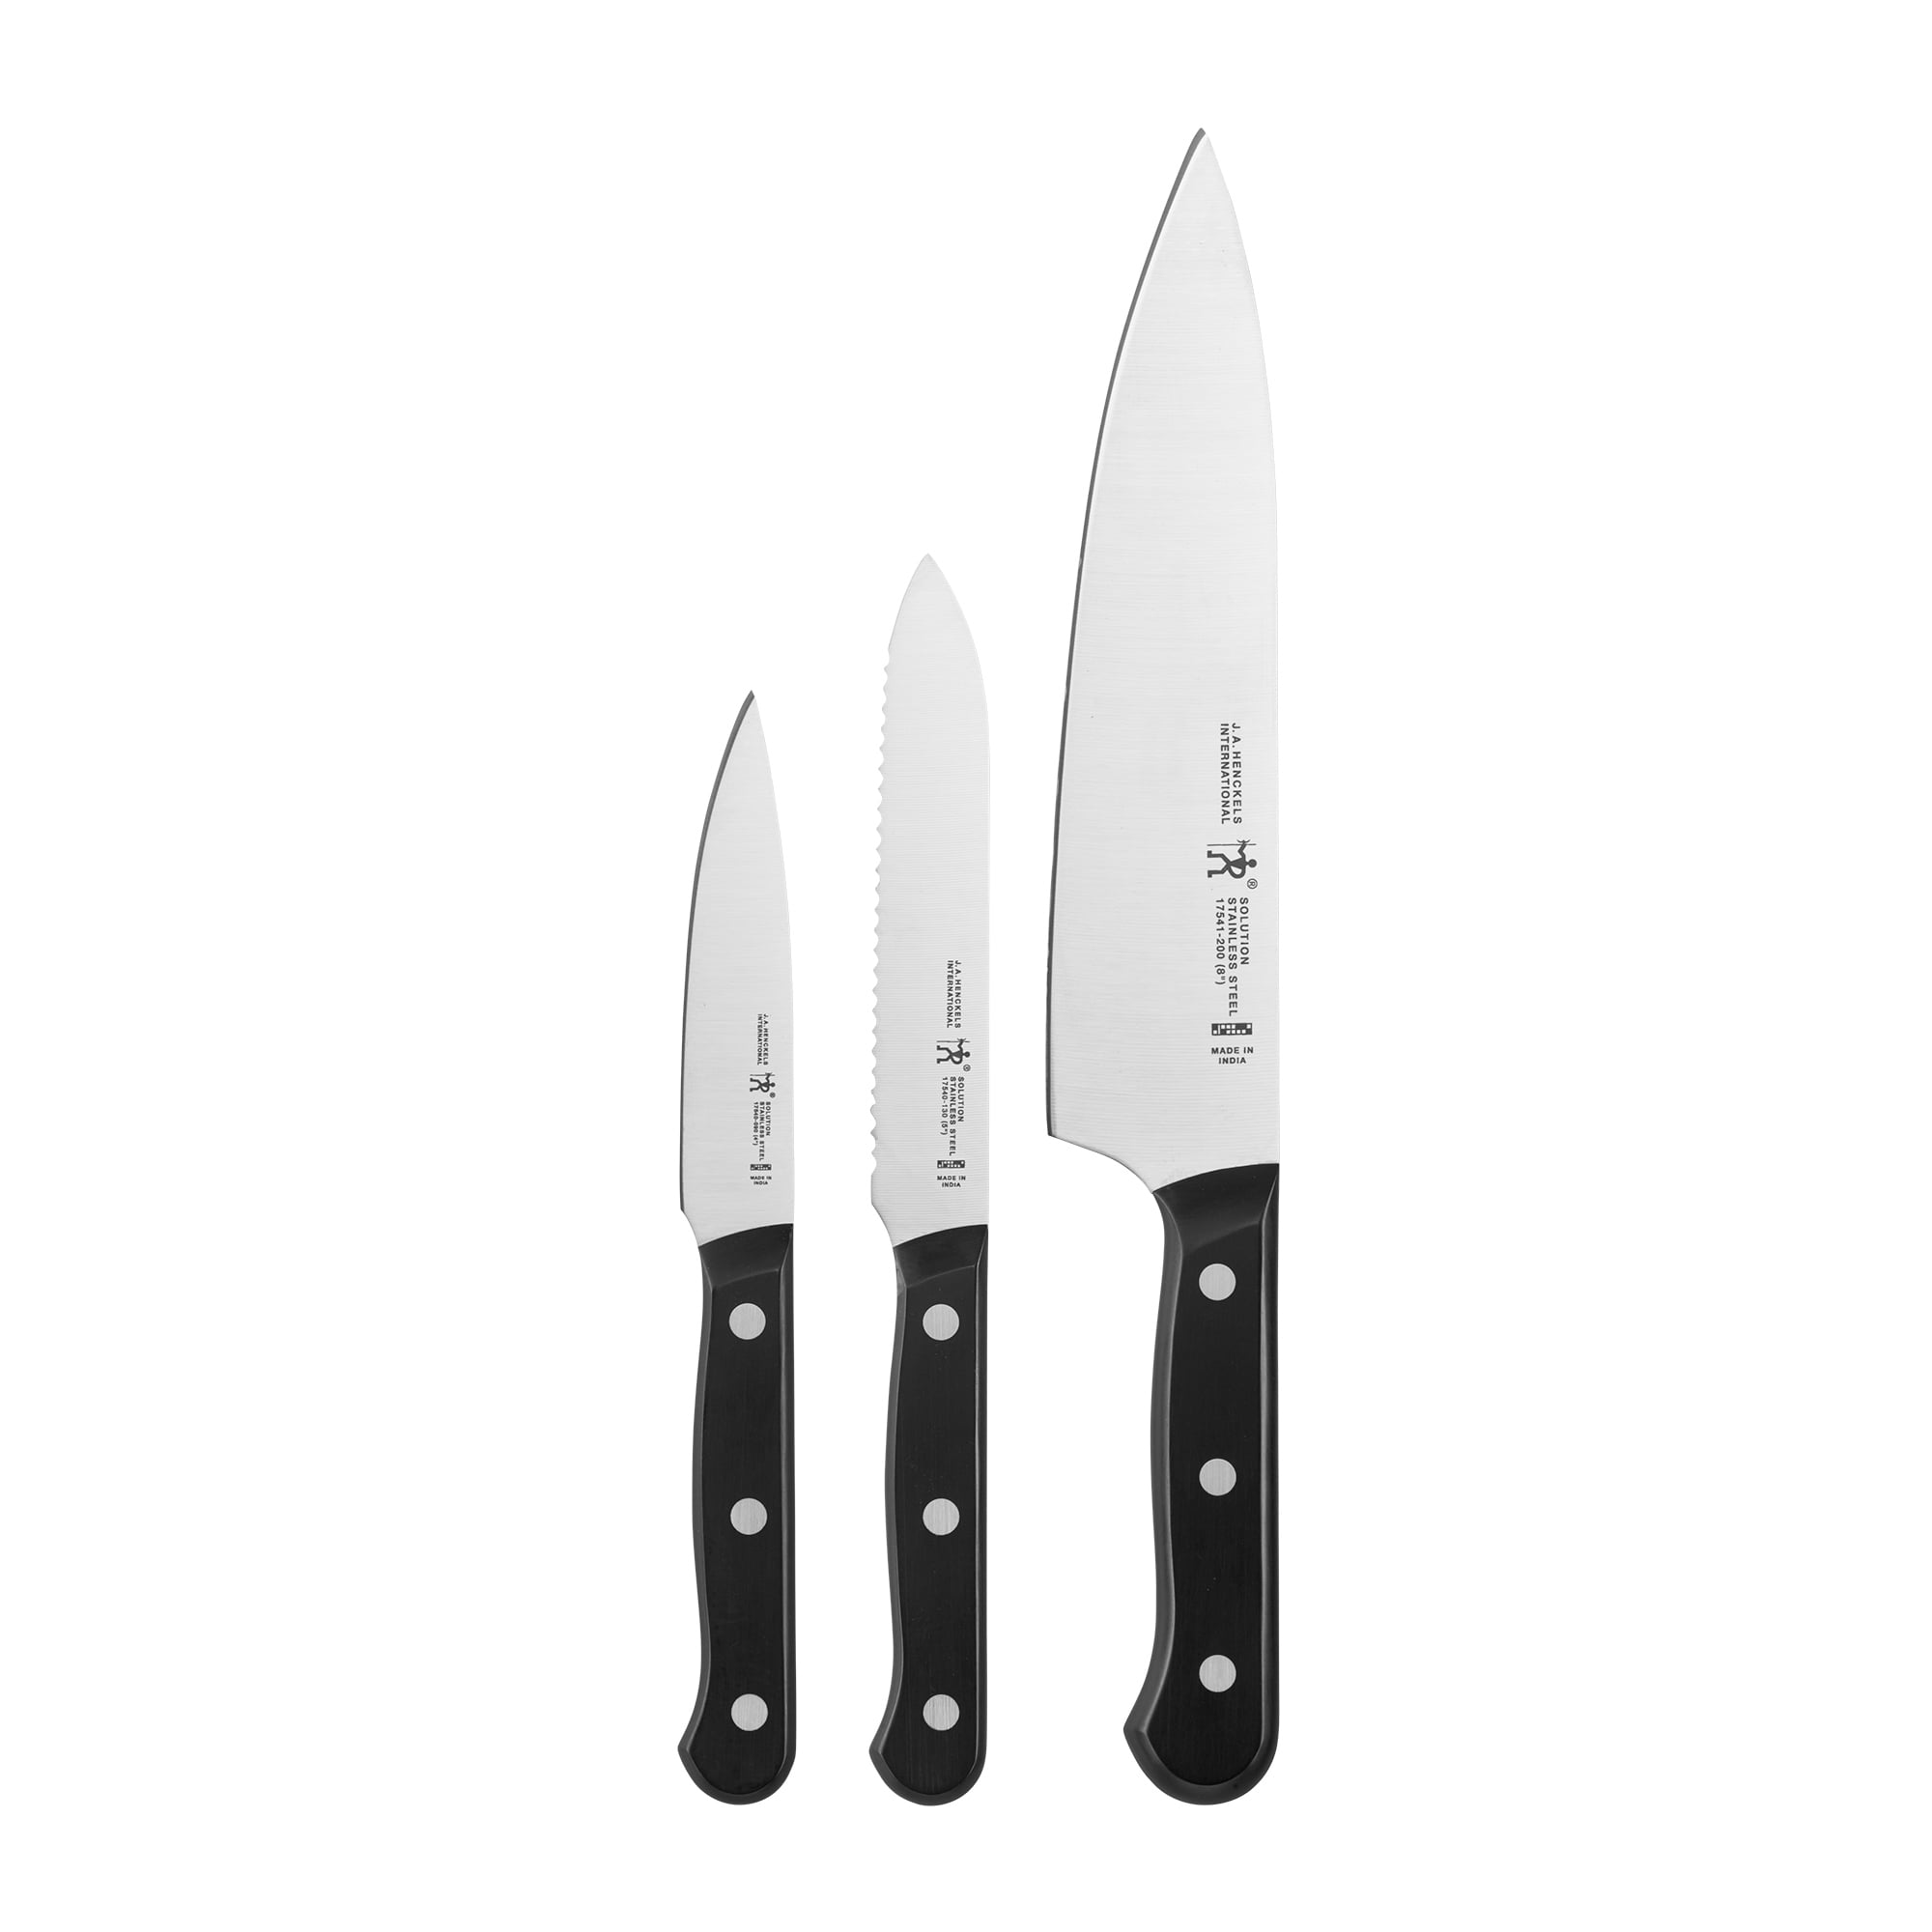 Walmart holiday deal: Save $746 on the premium Henckels Knife Set